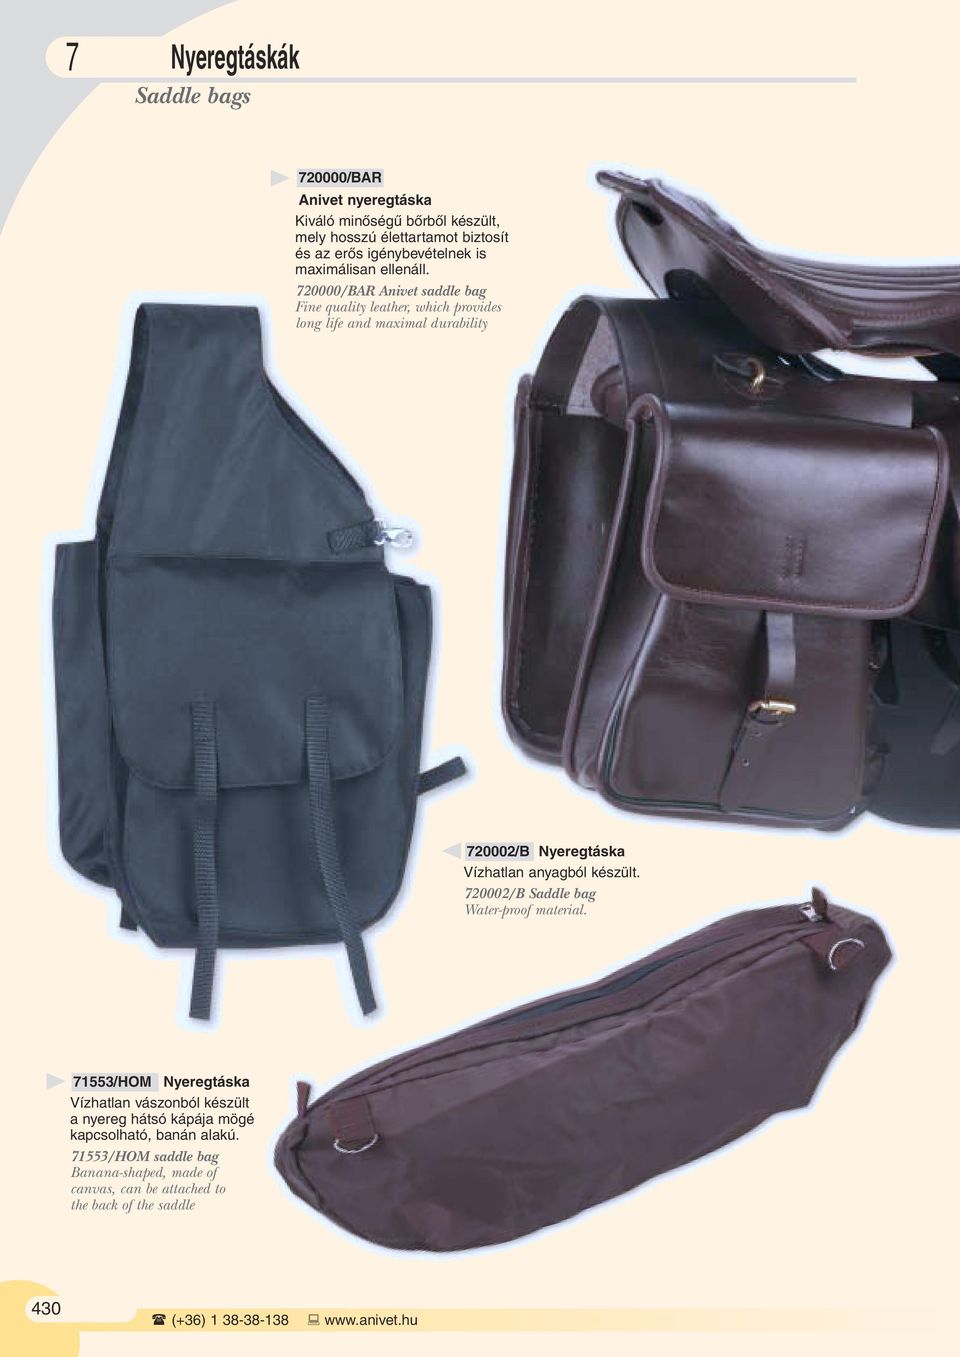 720000/BAR Anivet saddle bag Fine quality leather, which provides long life and maximal durability 720002/B Nyeregtáska Vízhatlan anyagból